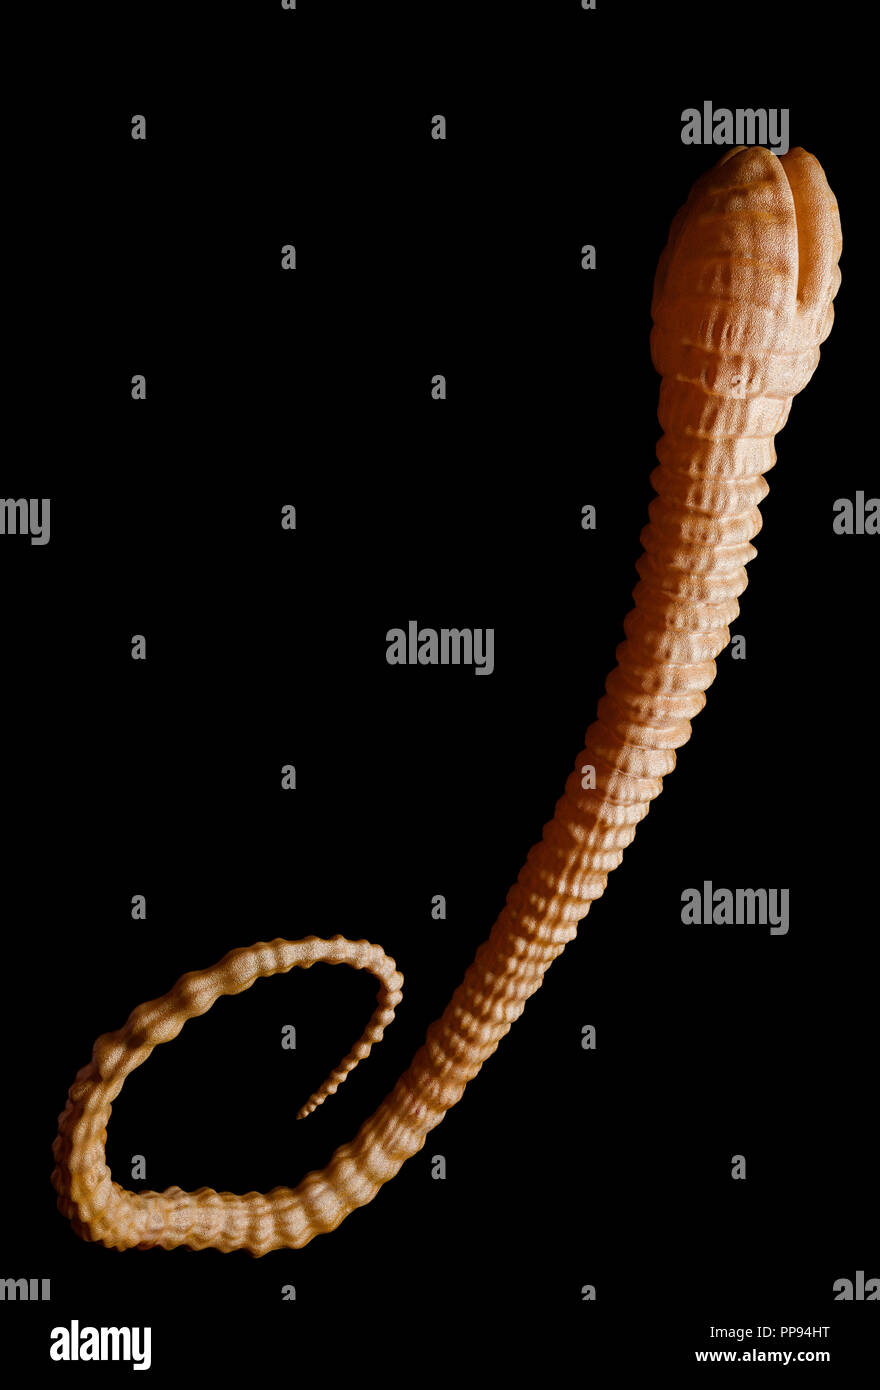 Fish Tapeworm - Detailed diphyllobothrium latum under the microscope - 3d rendering Stock Photo